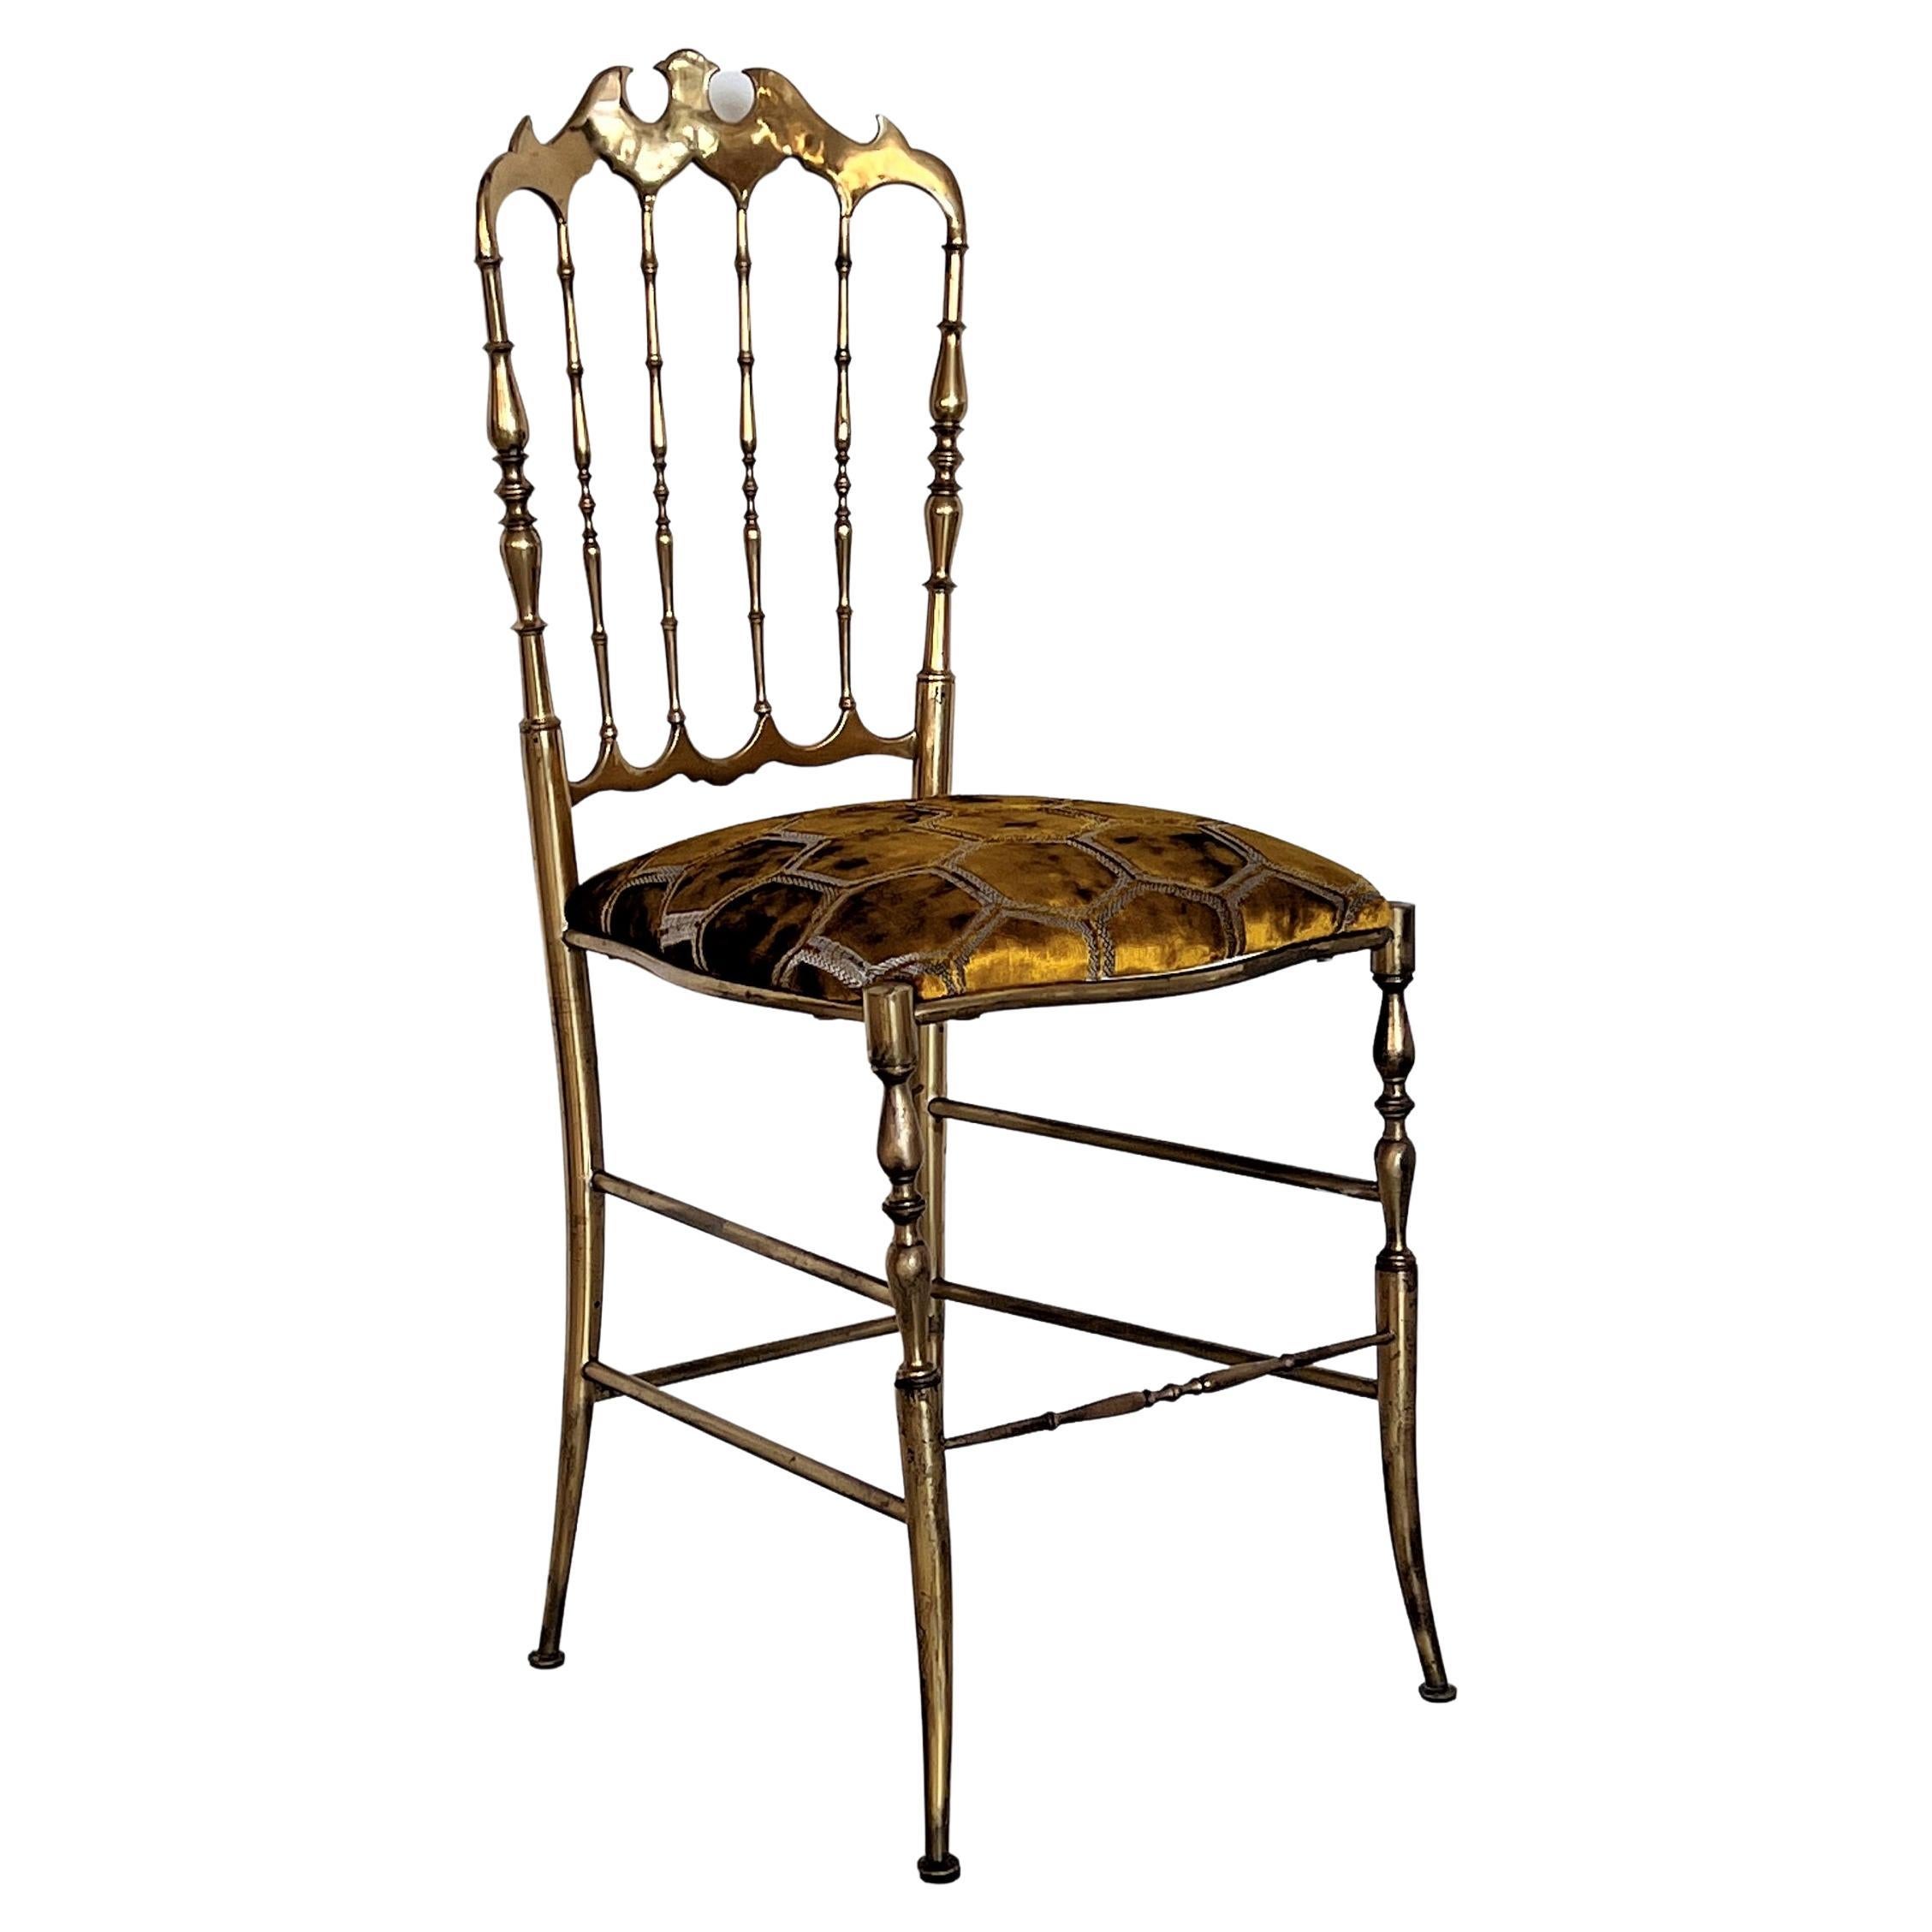 Italian Mid-Century Chiavari Chair in Full Brass with New Upholstery, 1970s